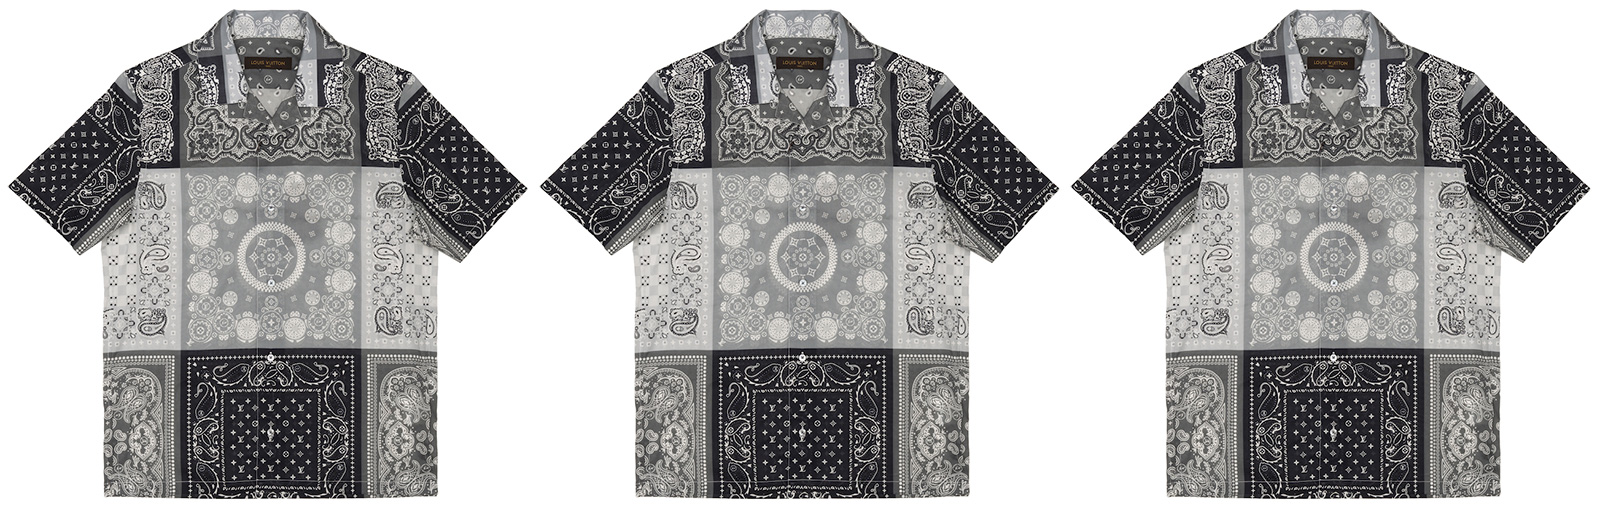 Louis Vuitton Black Paisley Shirt at DSM Ginza